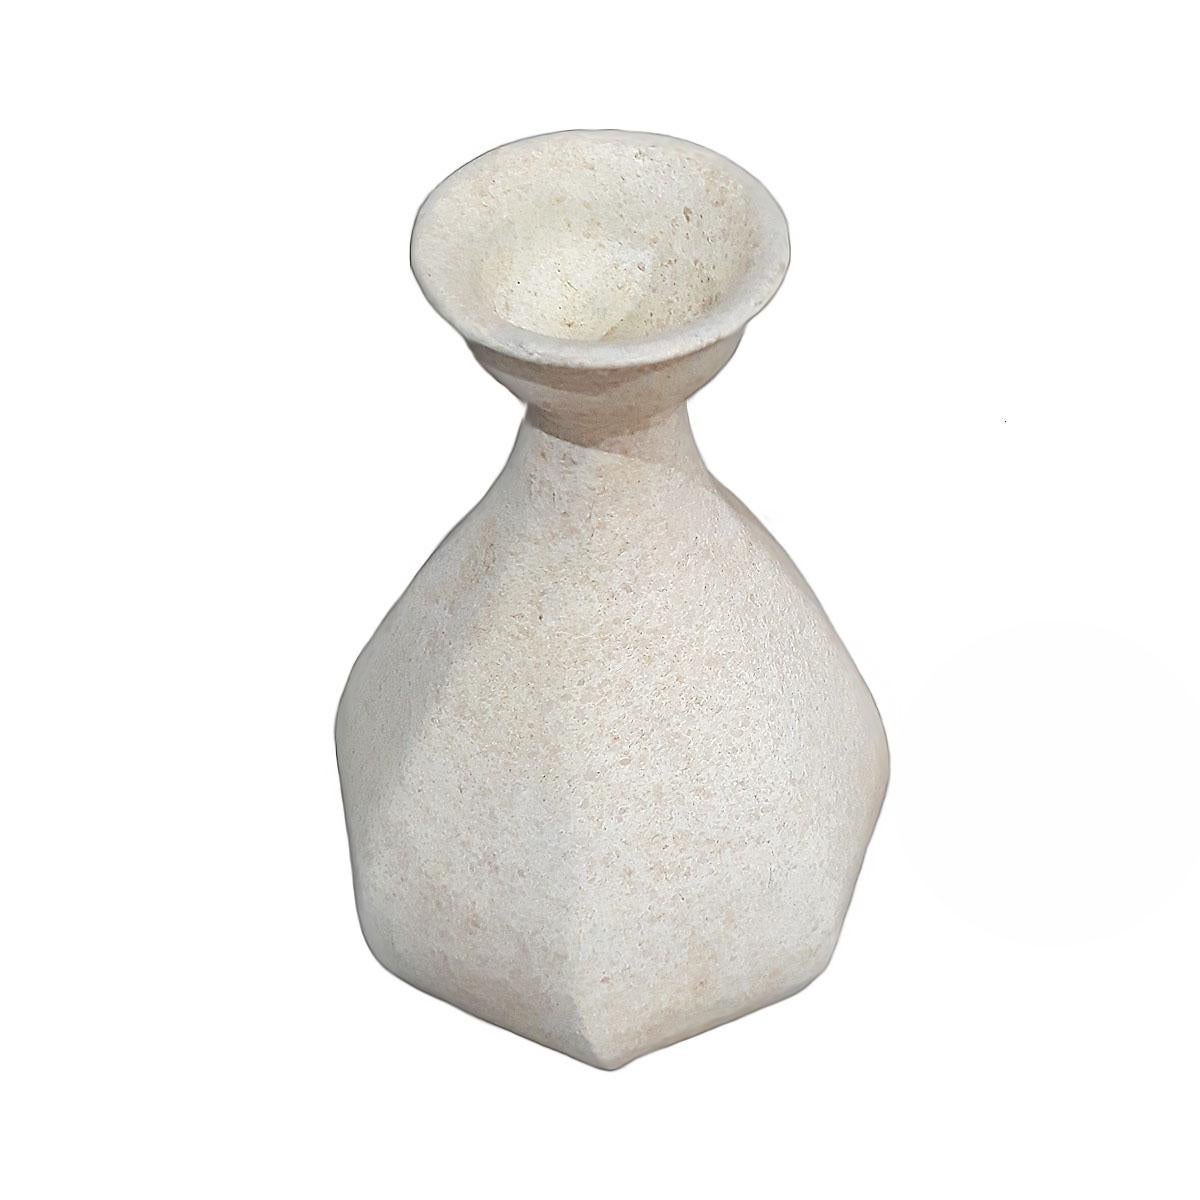 Other Thai Ceramic Vase, Early 20th Century